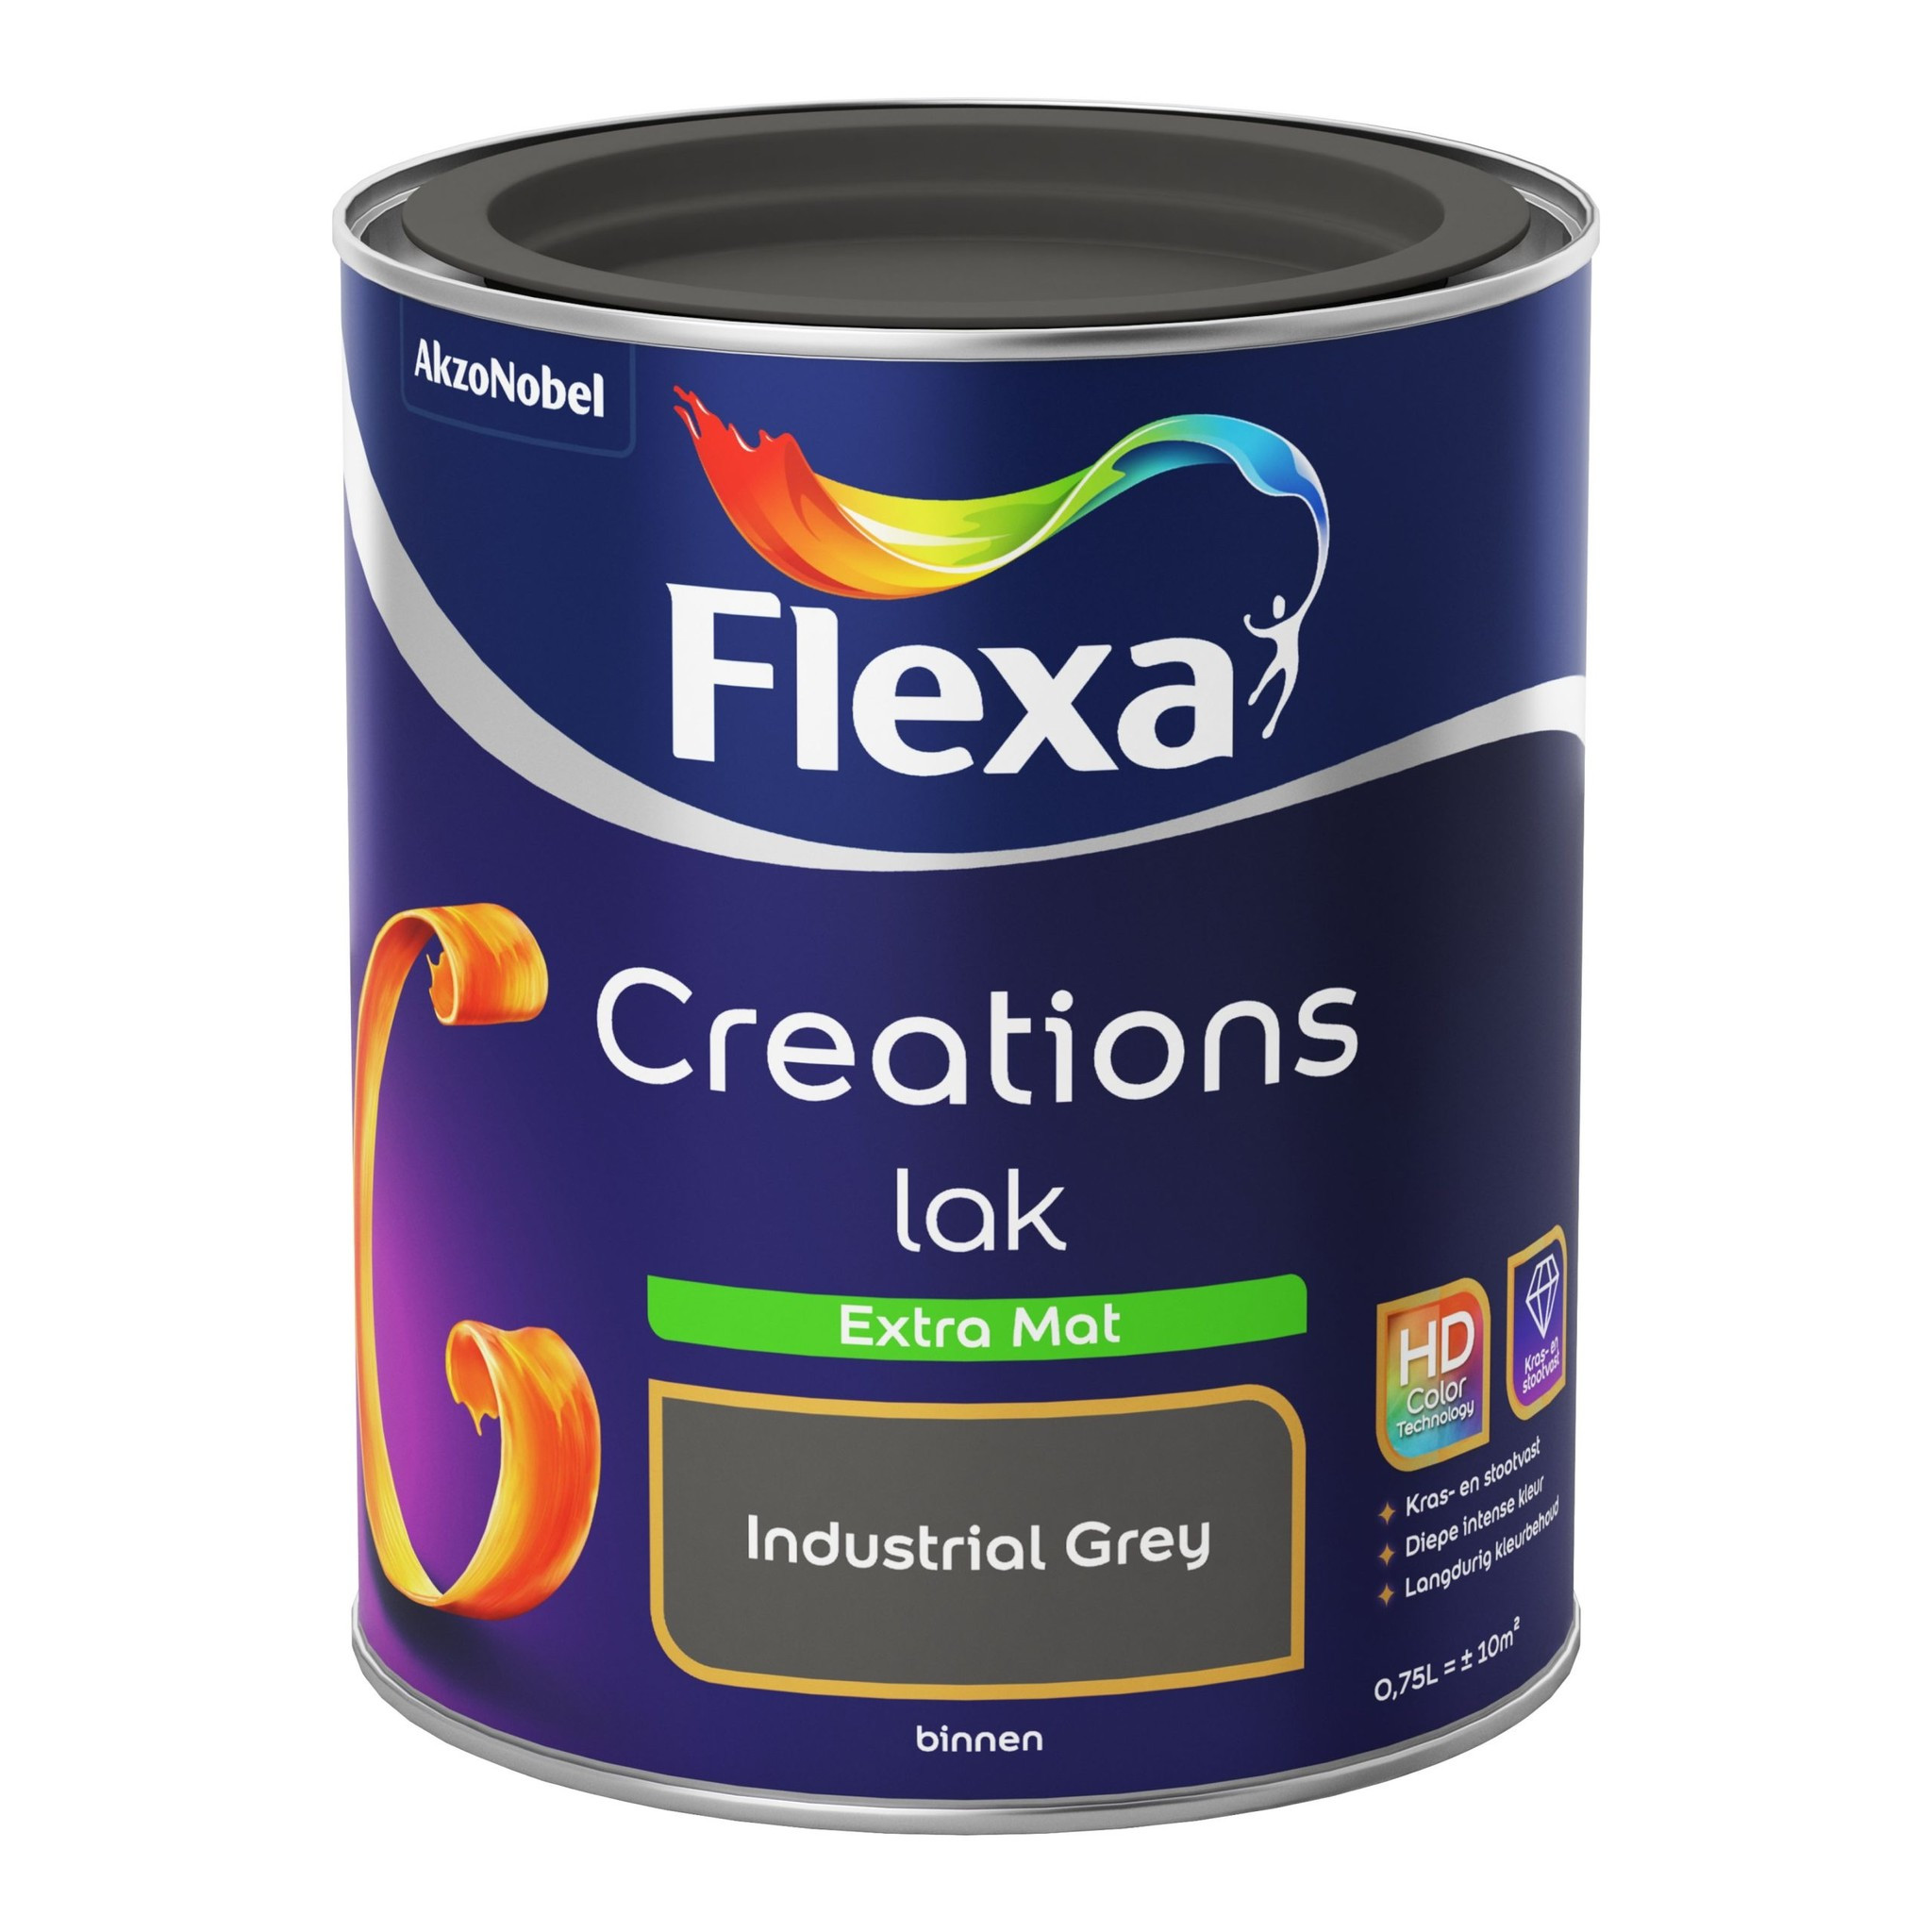 Flexa Creations Lak Extra Mat - Industrial Grey